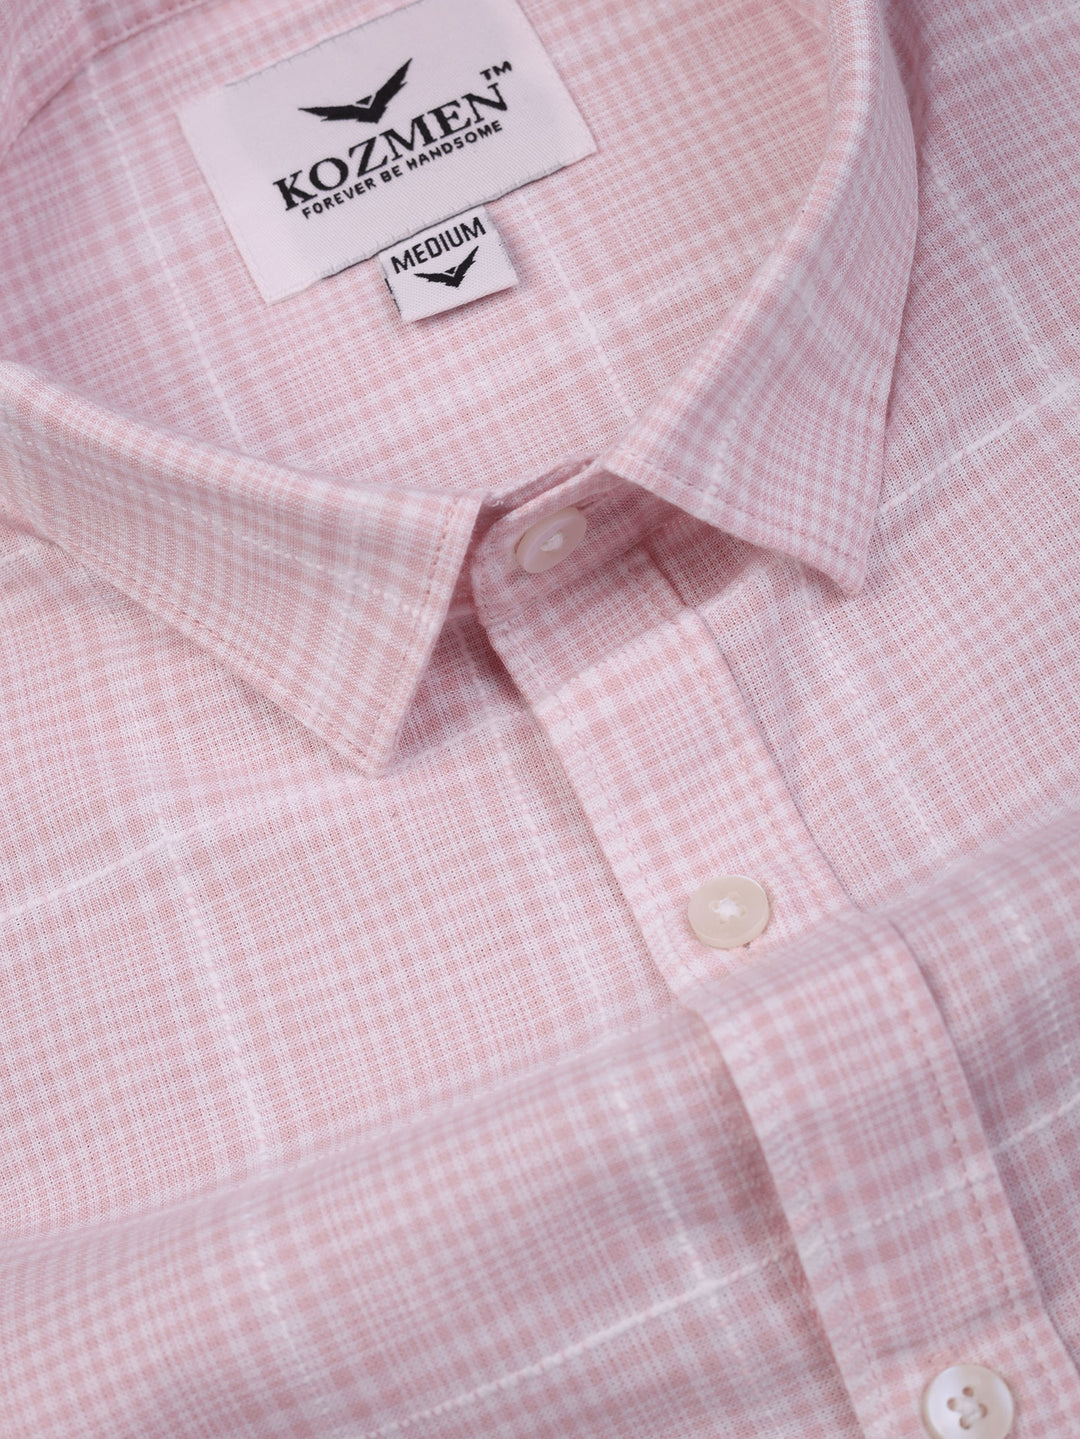 Pink & White Turtan Plaid Cotton Casual Shirt